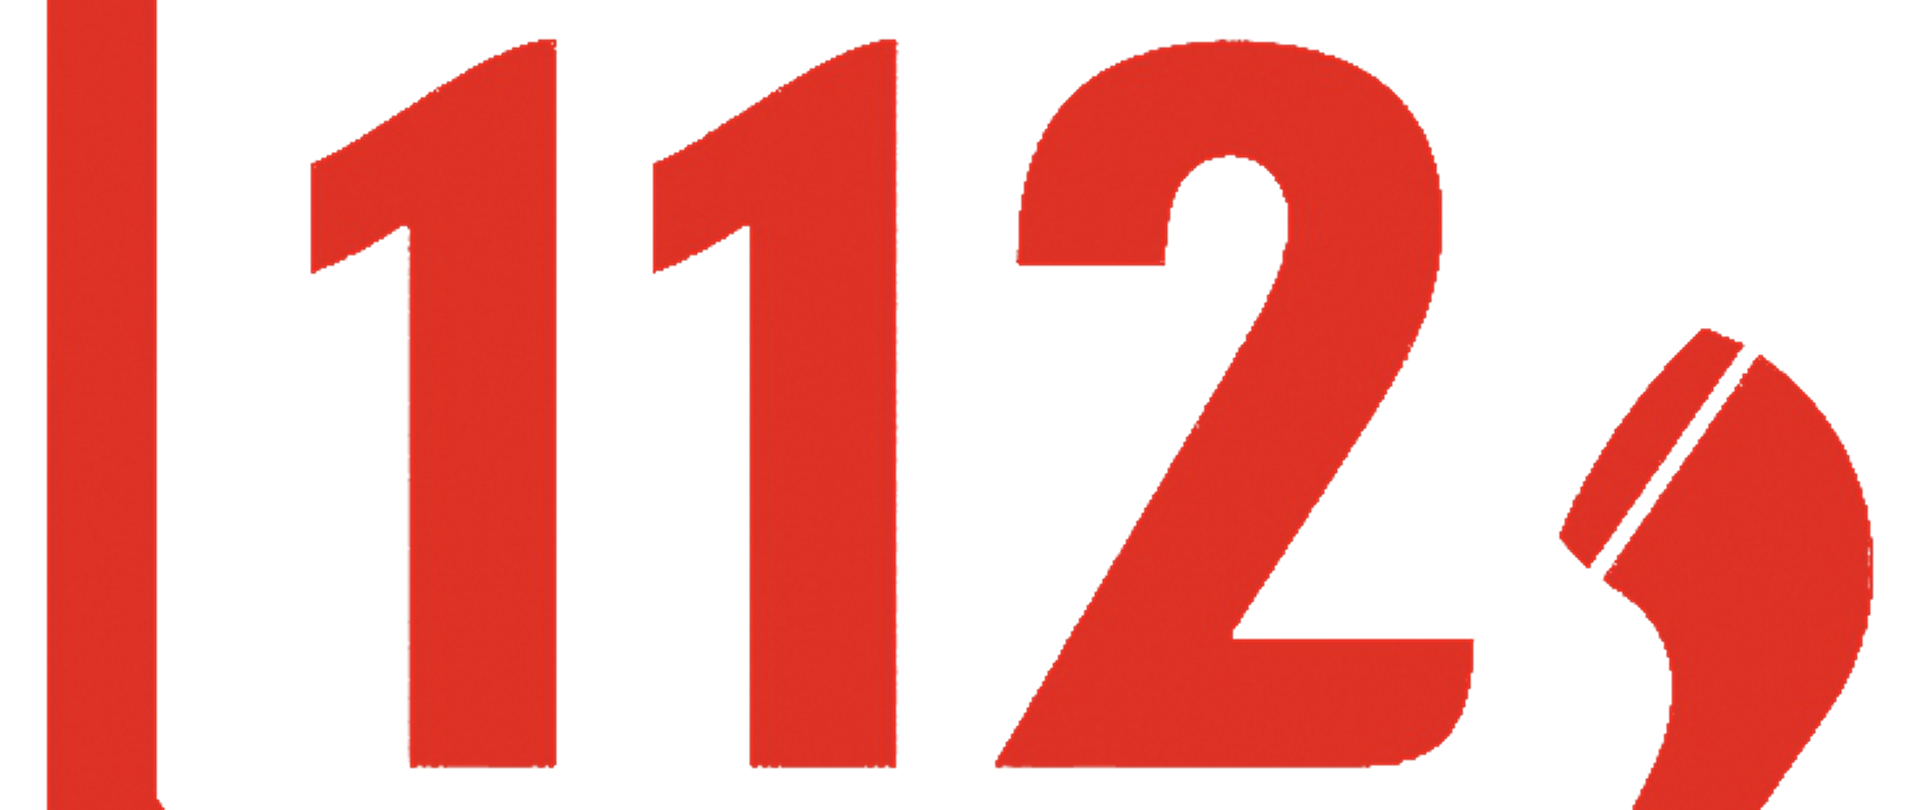 Logo 112